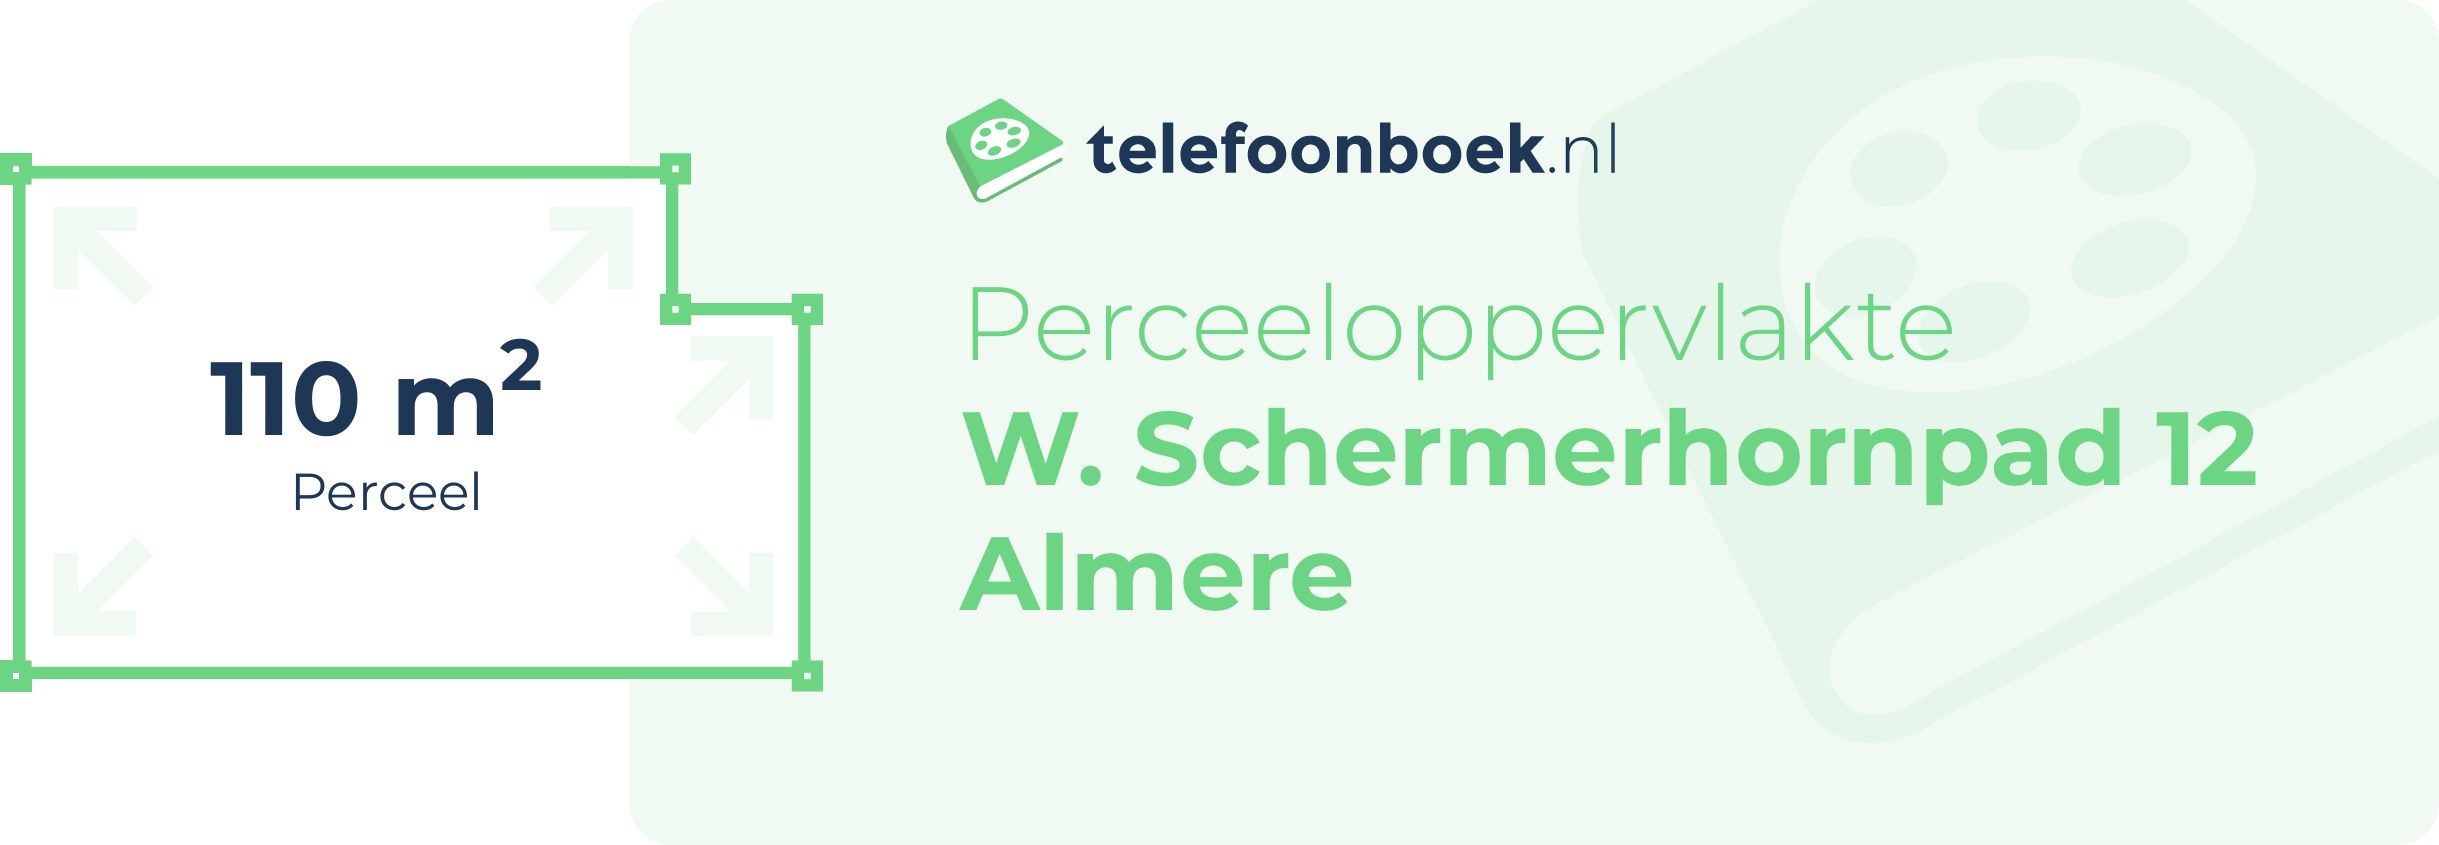 Perceeloppervlakte W. Schermerhornpad 12 Almere